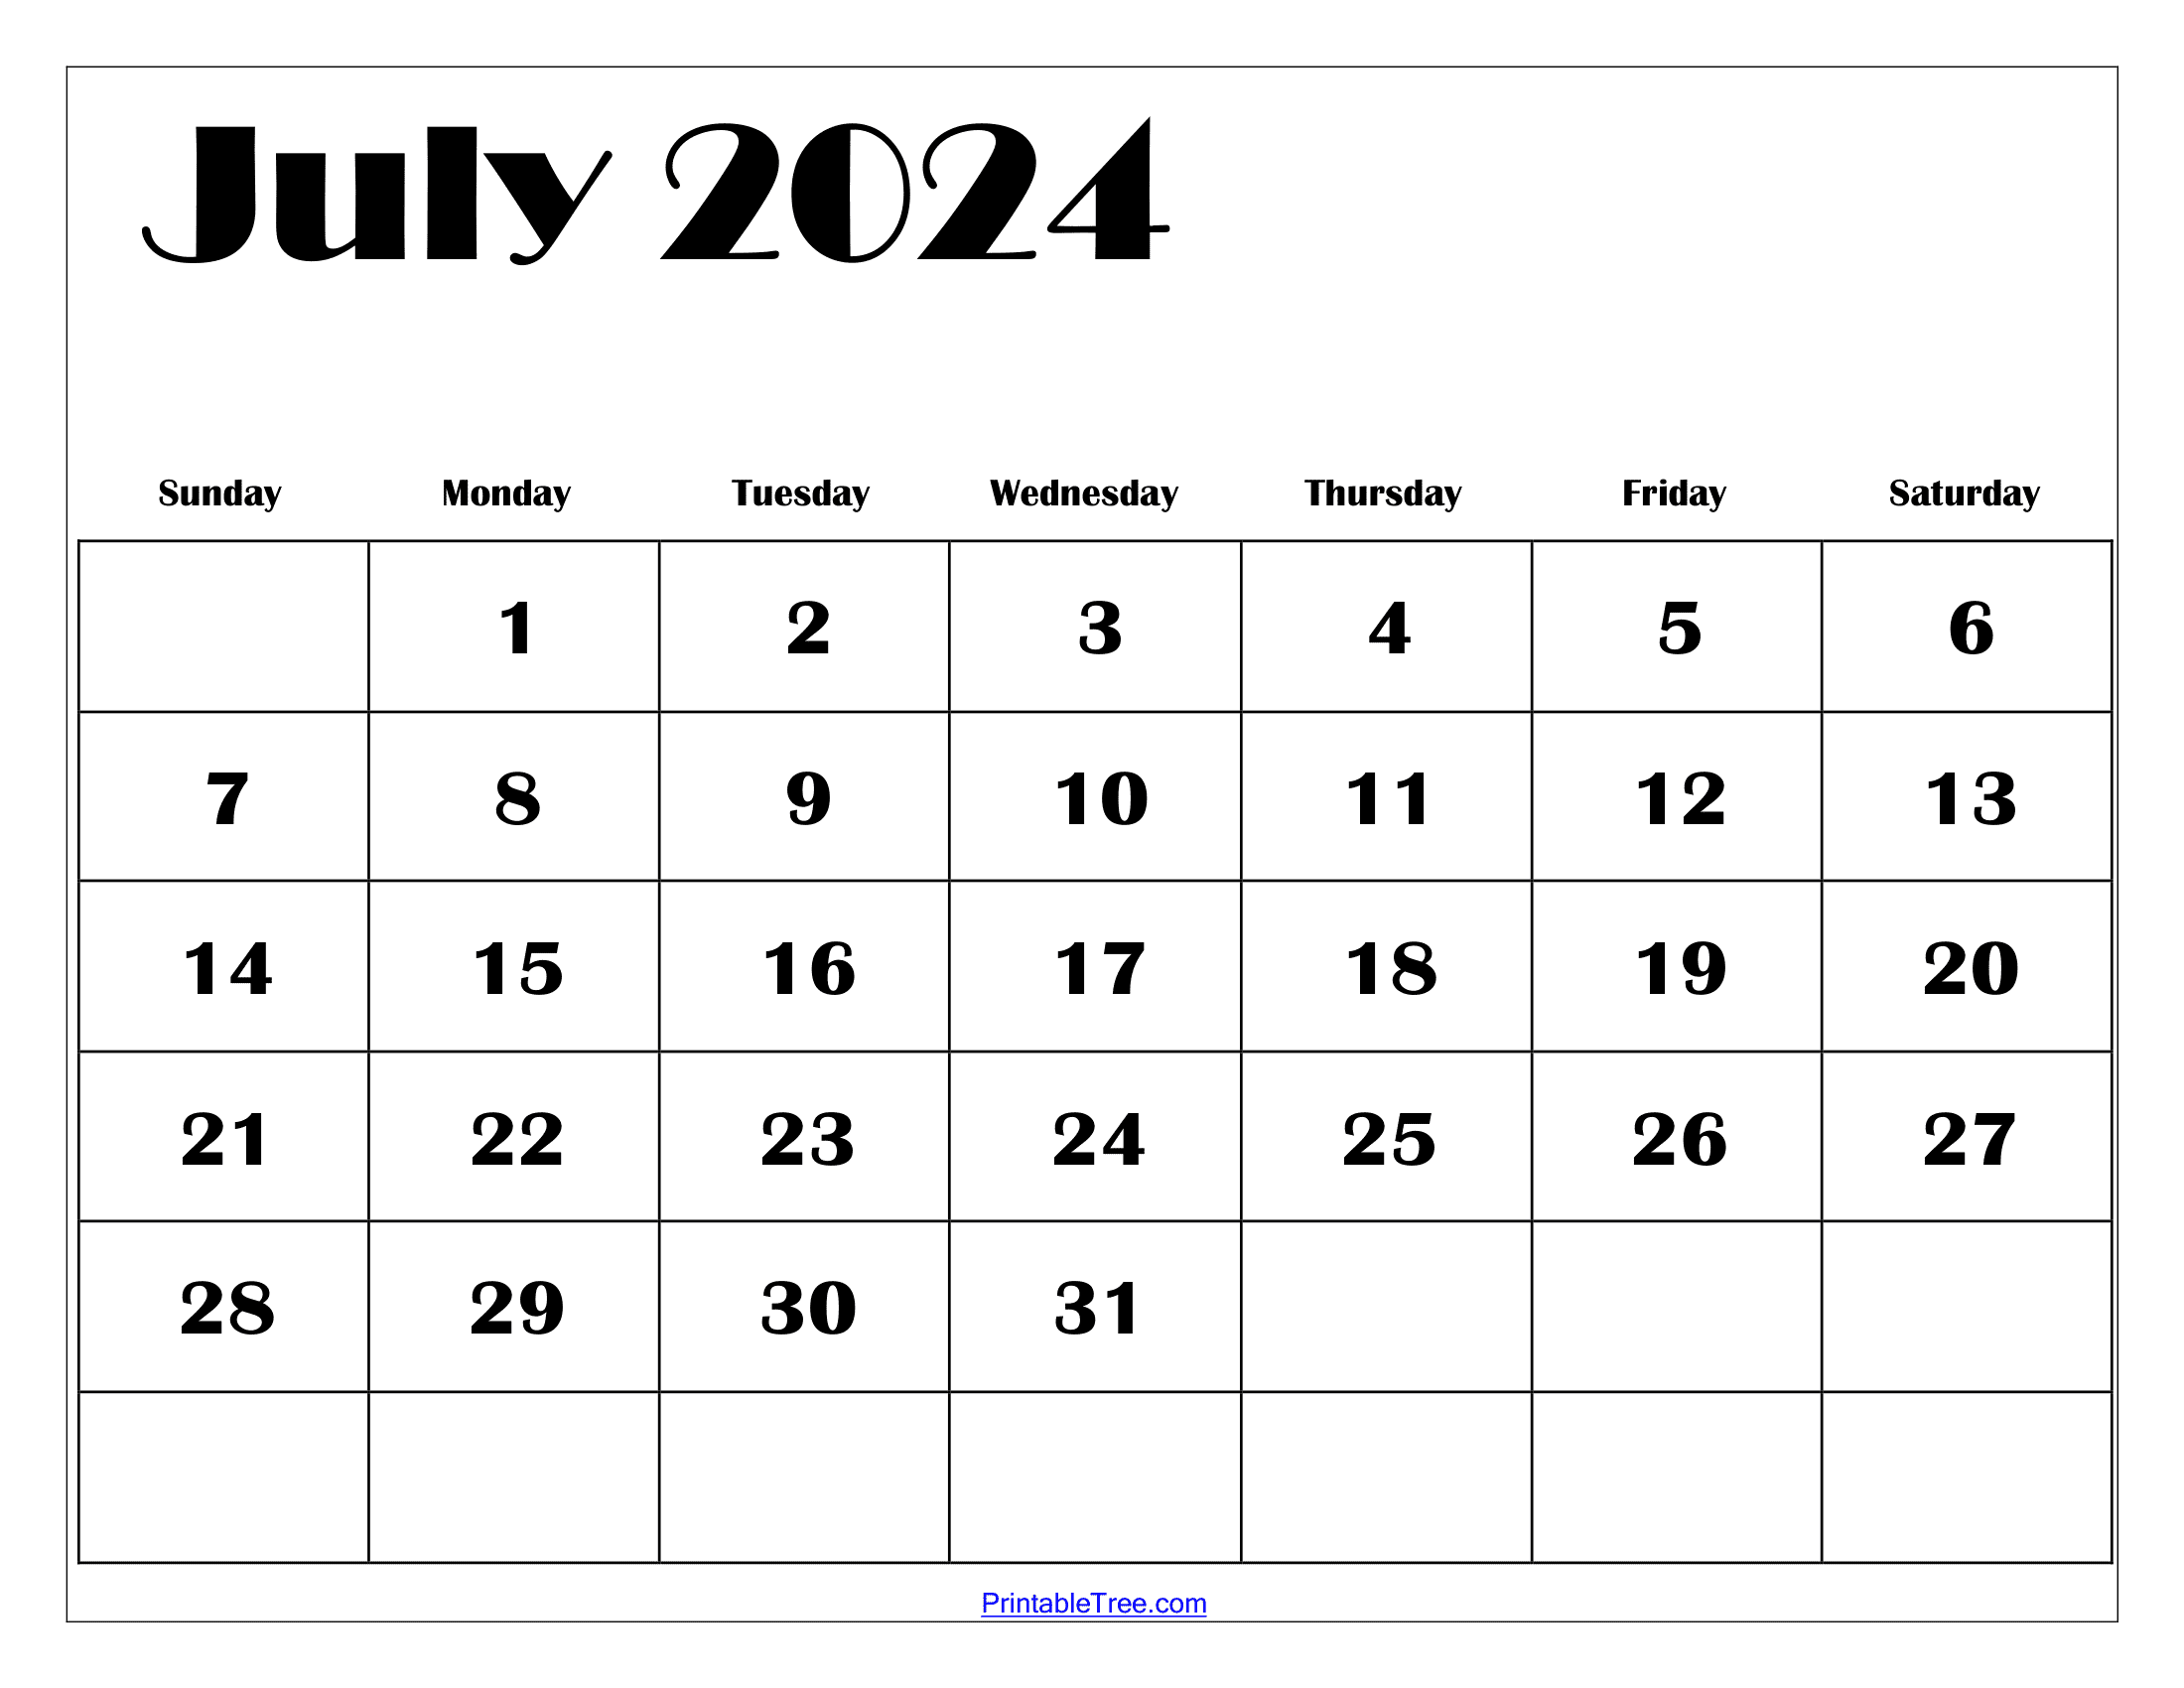 July 2024 Calendar Printable Pdf With Holidays Free Template for July 2024 Calendar With Holidays Printable Free